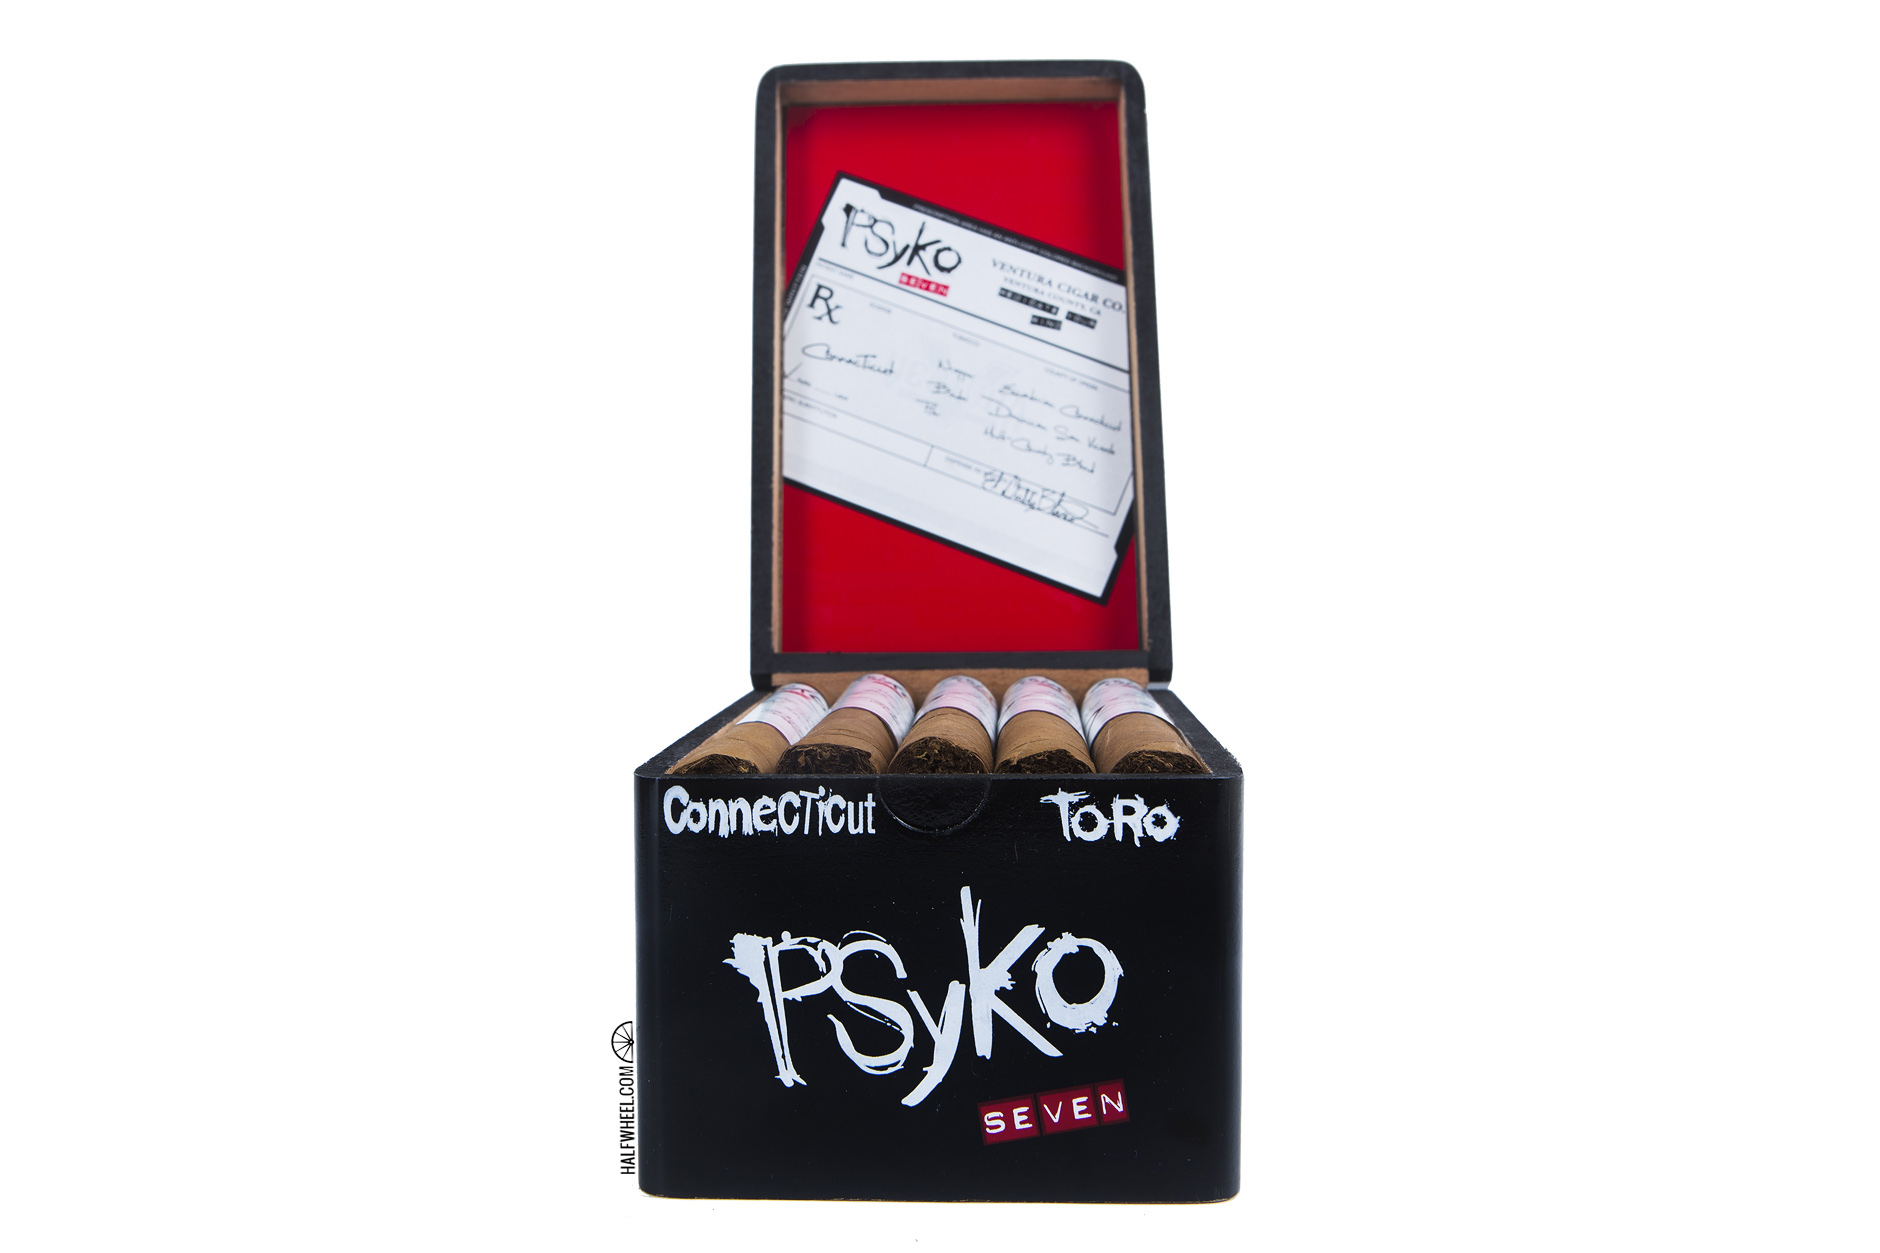 PSyKo Seven Connecticut Toro Box 3